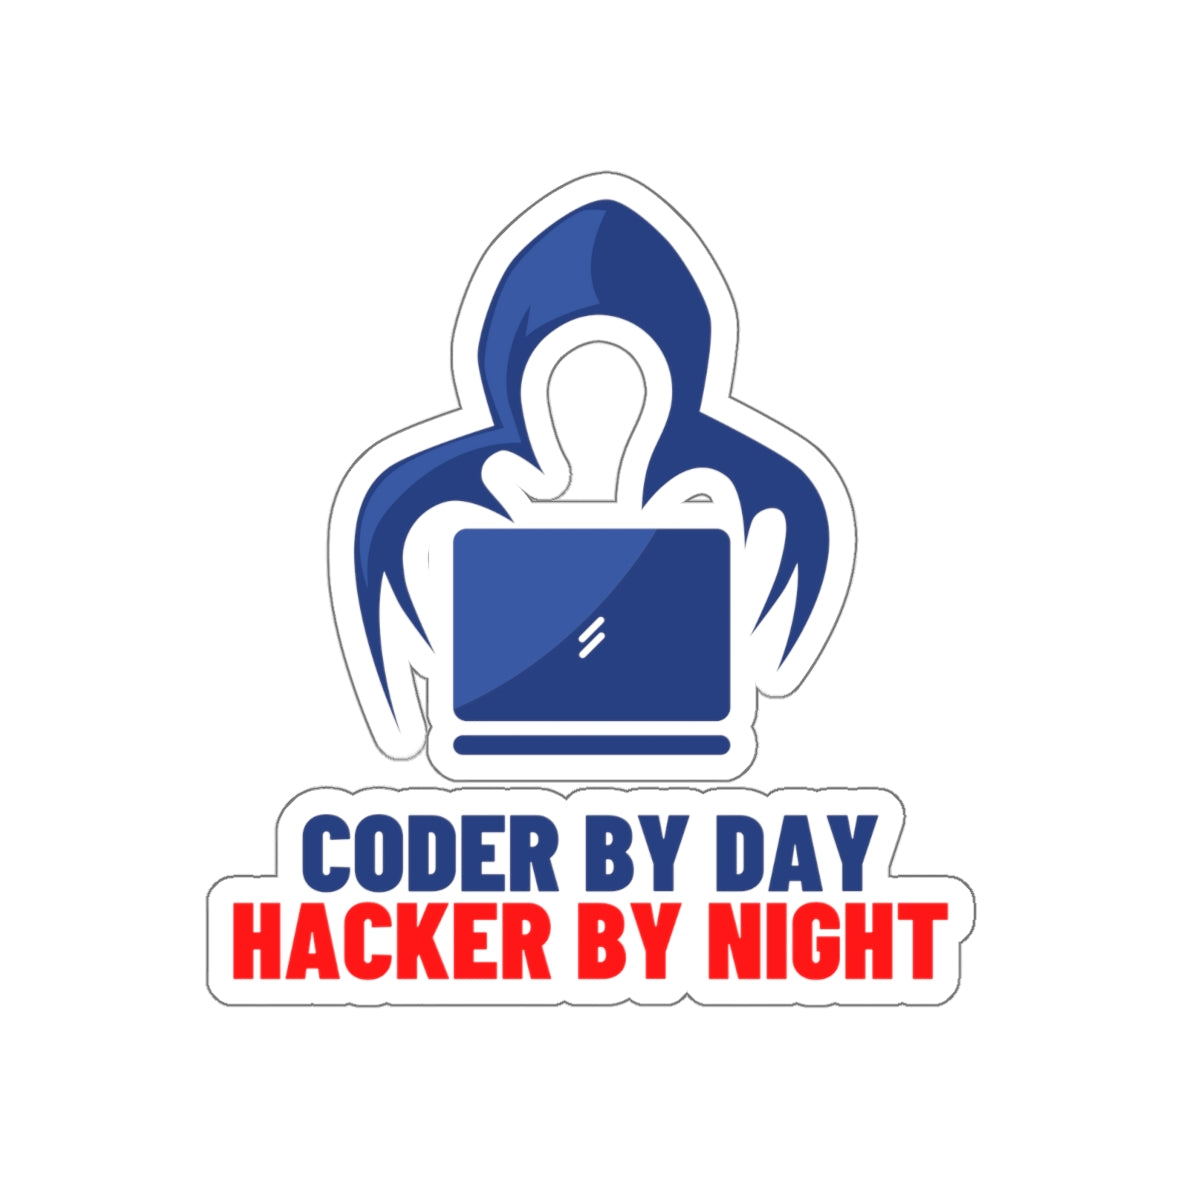 Coder by day hacker by night - Developer / Programmer / Software Engineer Kiss Cut Sticker